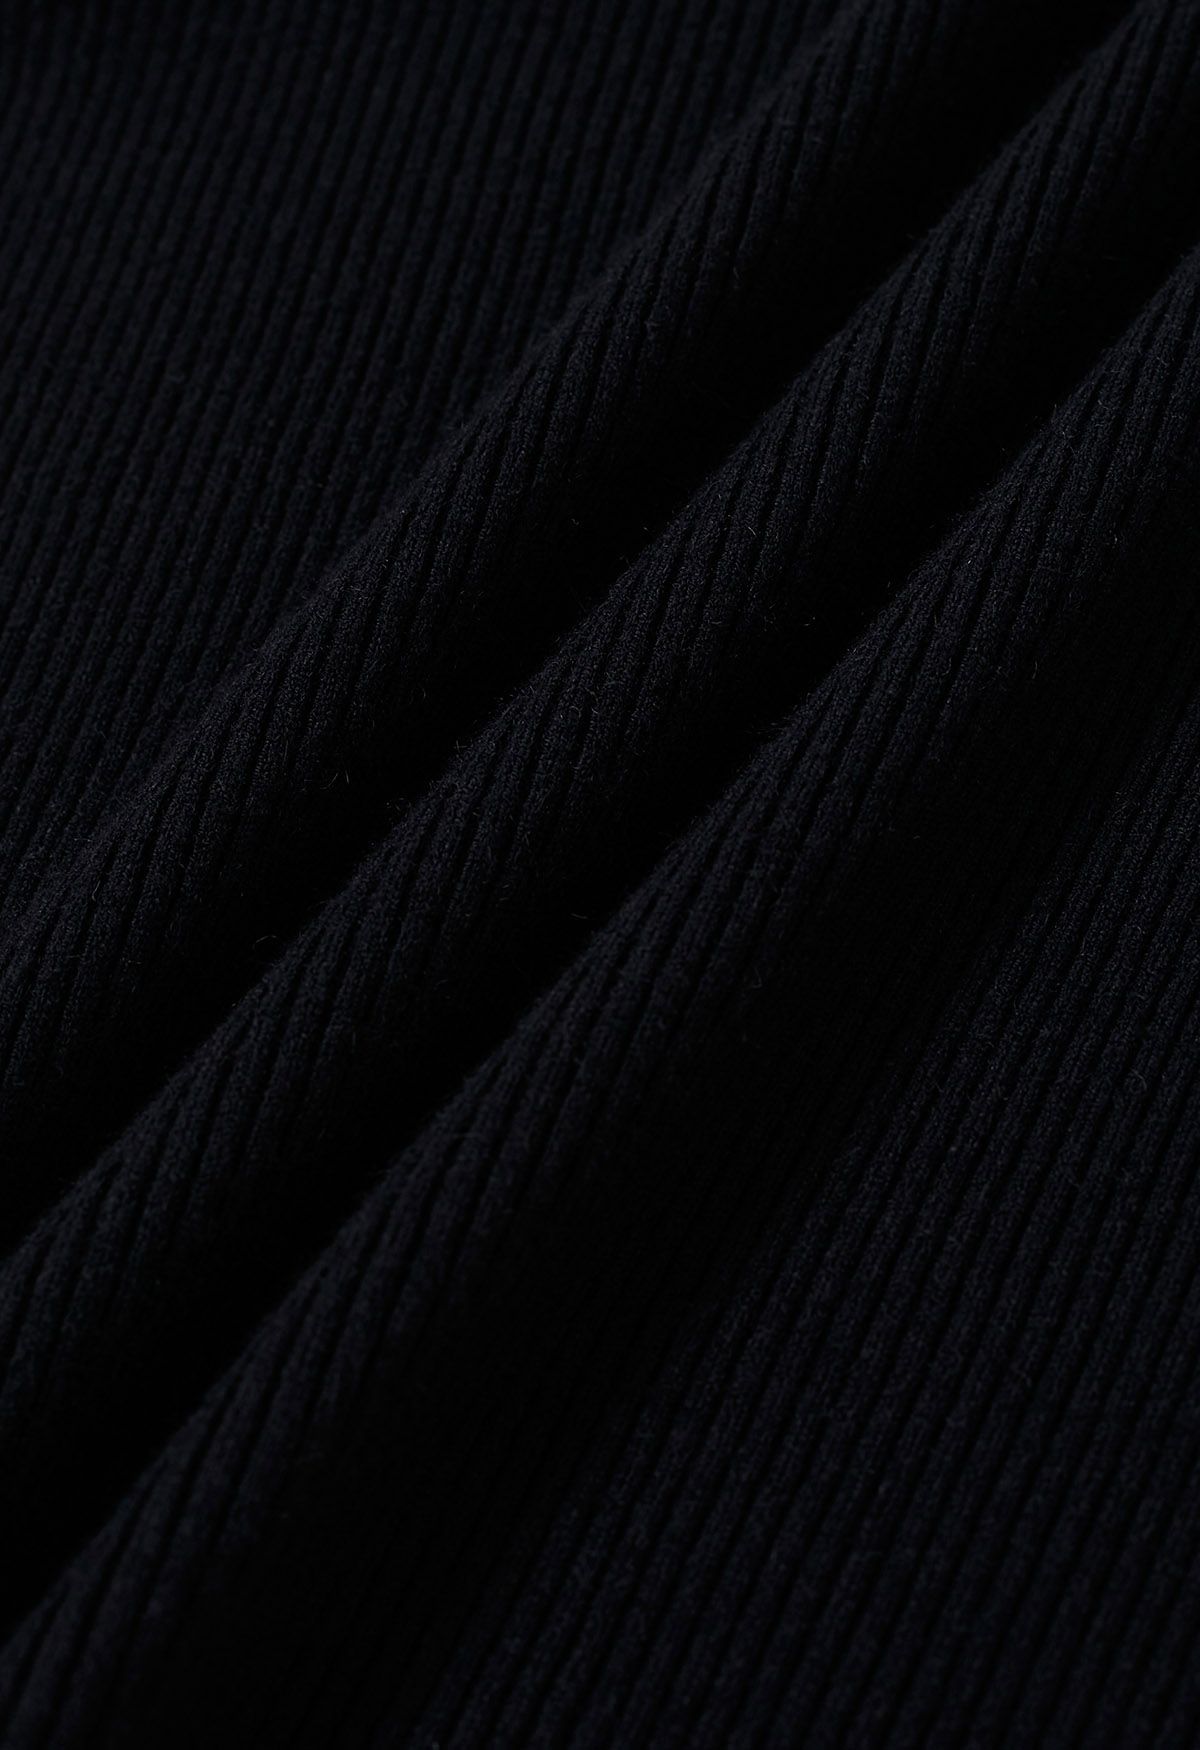 Pearl Ruffle Organza Adorned Knit Top in Black